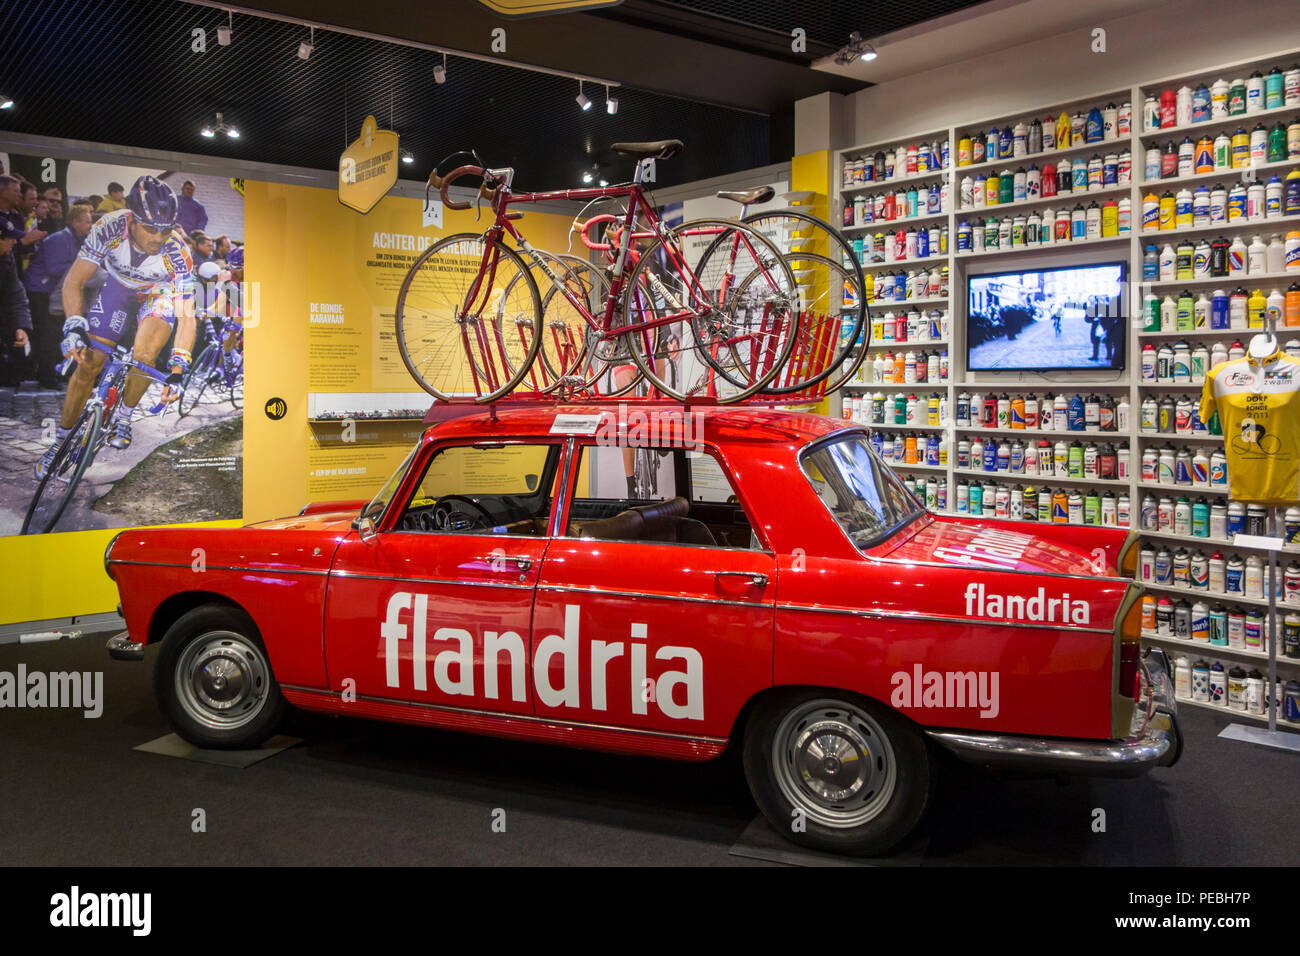 Flandria team Auto im Centrum Ronde van Vlaanderen/Tour von Flandern Center, Museum widmet sich Flandern Rennrad Racing, Oudenaarde, Belgien Stockfoto